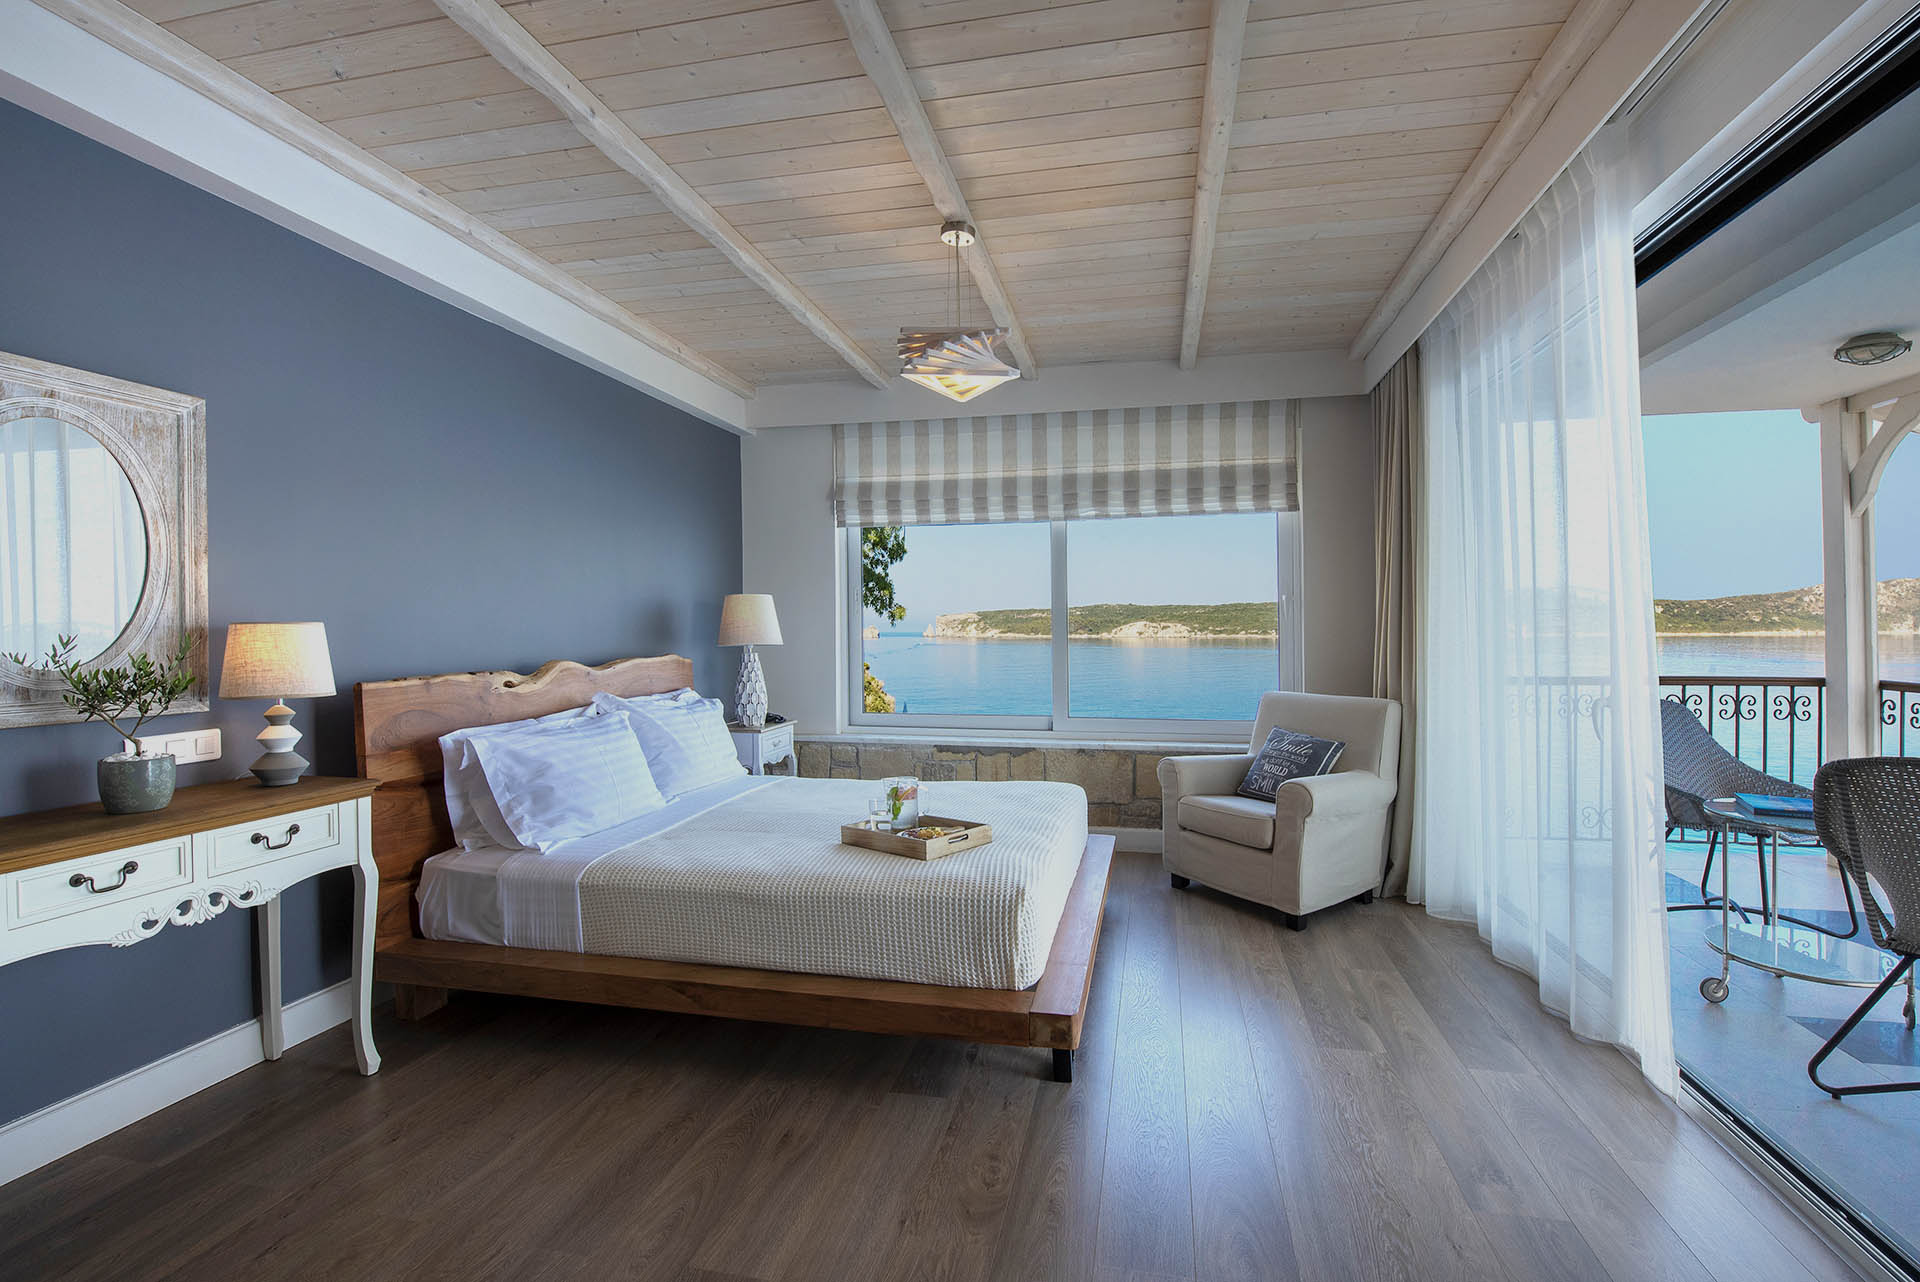 Offers | Karalis Beach Hotel in Pylos | Pylos Messinia Hotels